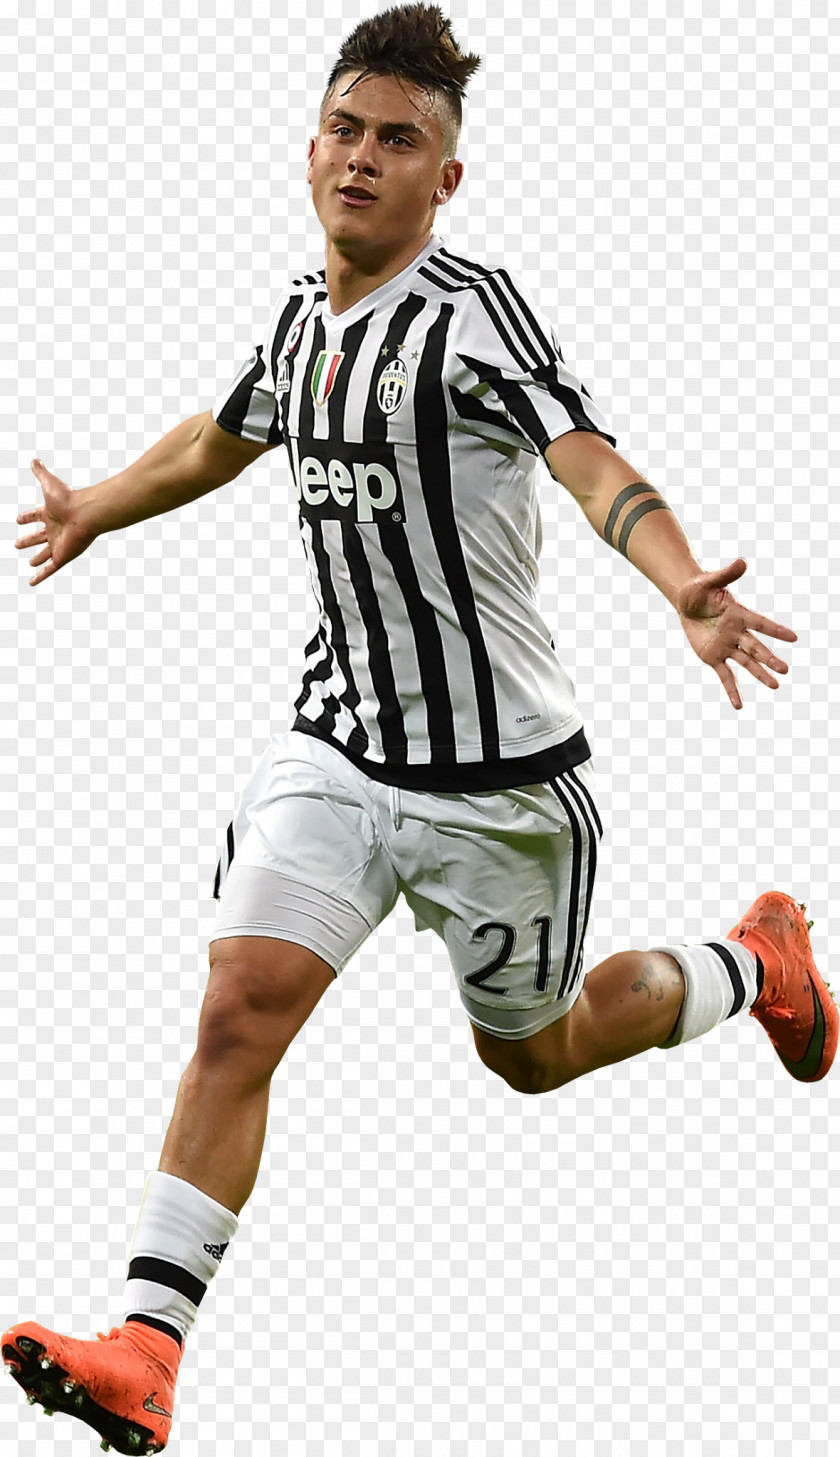 Football Paulo Dybala Juventus F.C. Argentina National Team Player PNG